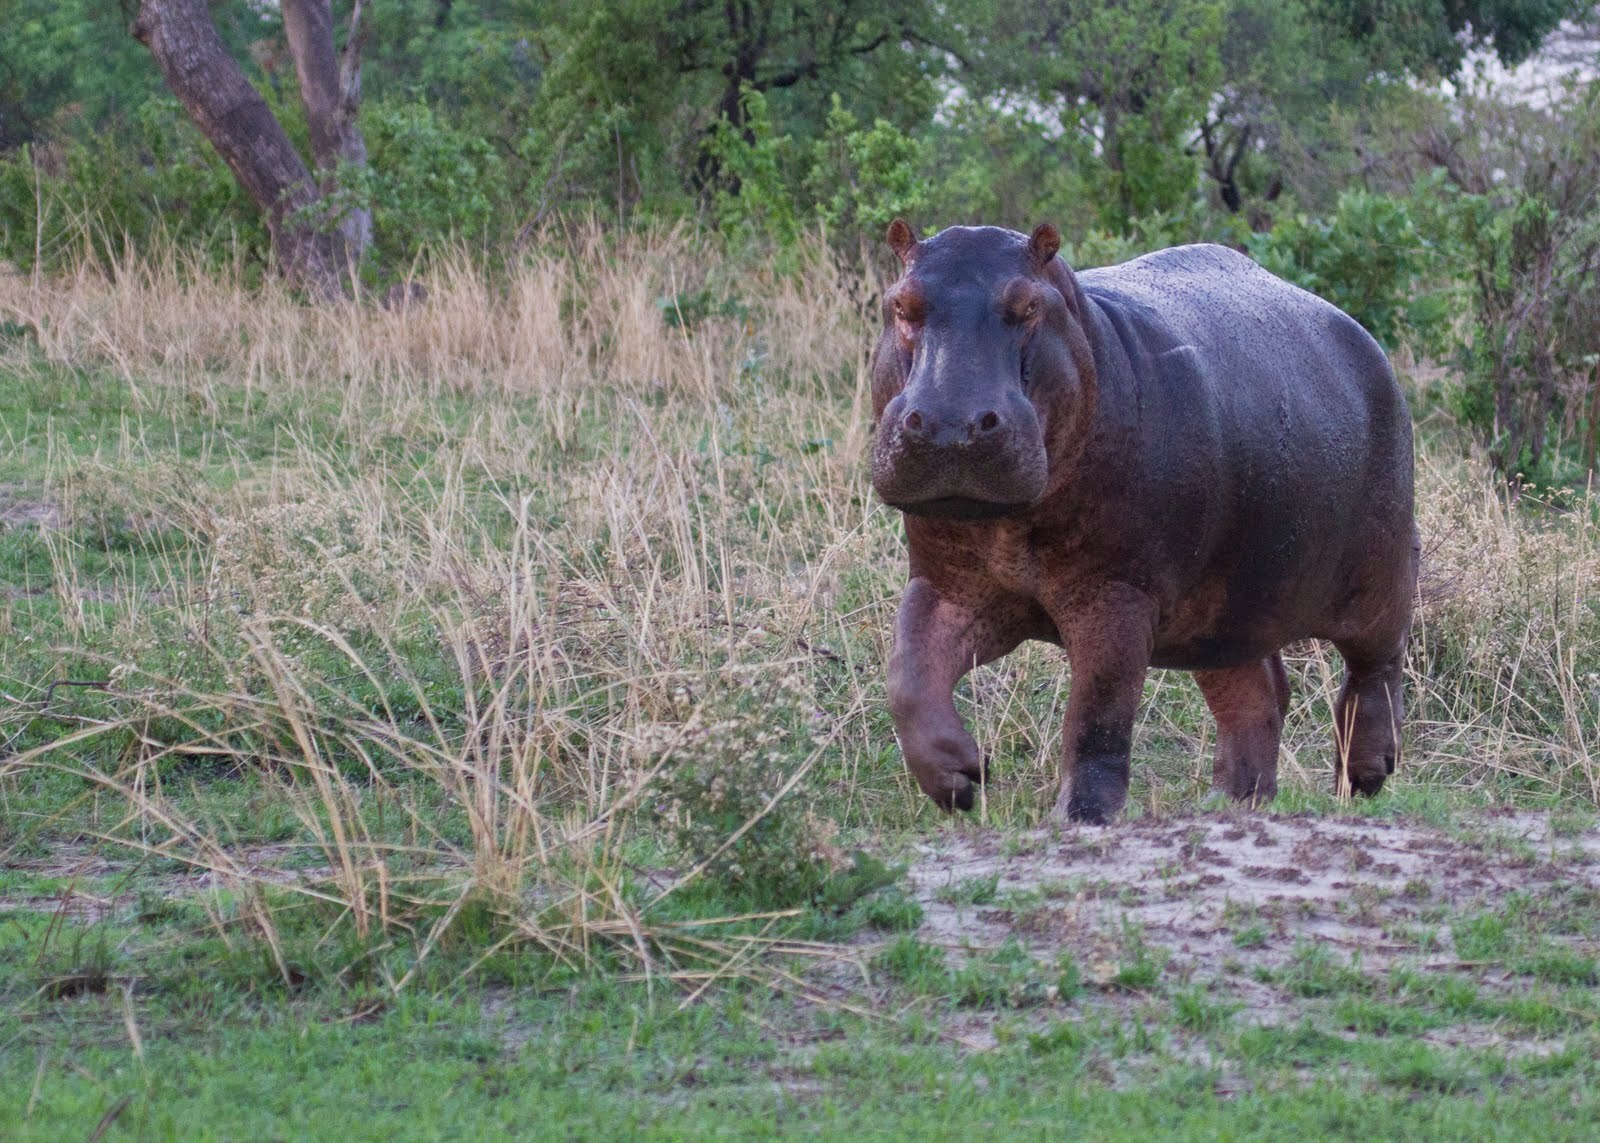 Hippo in Tanzania, Katavi National Park. Image credit: Courtesy of Grégoire Dubois